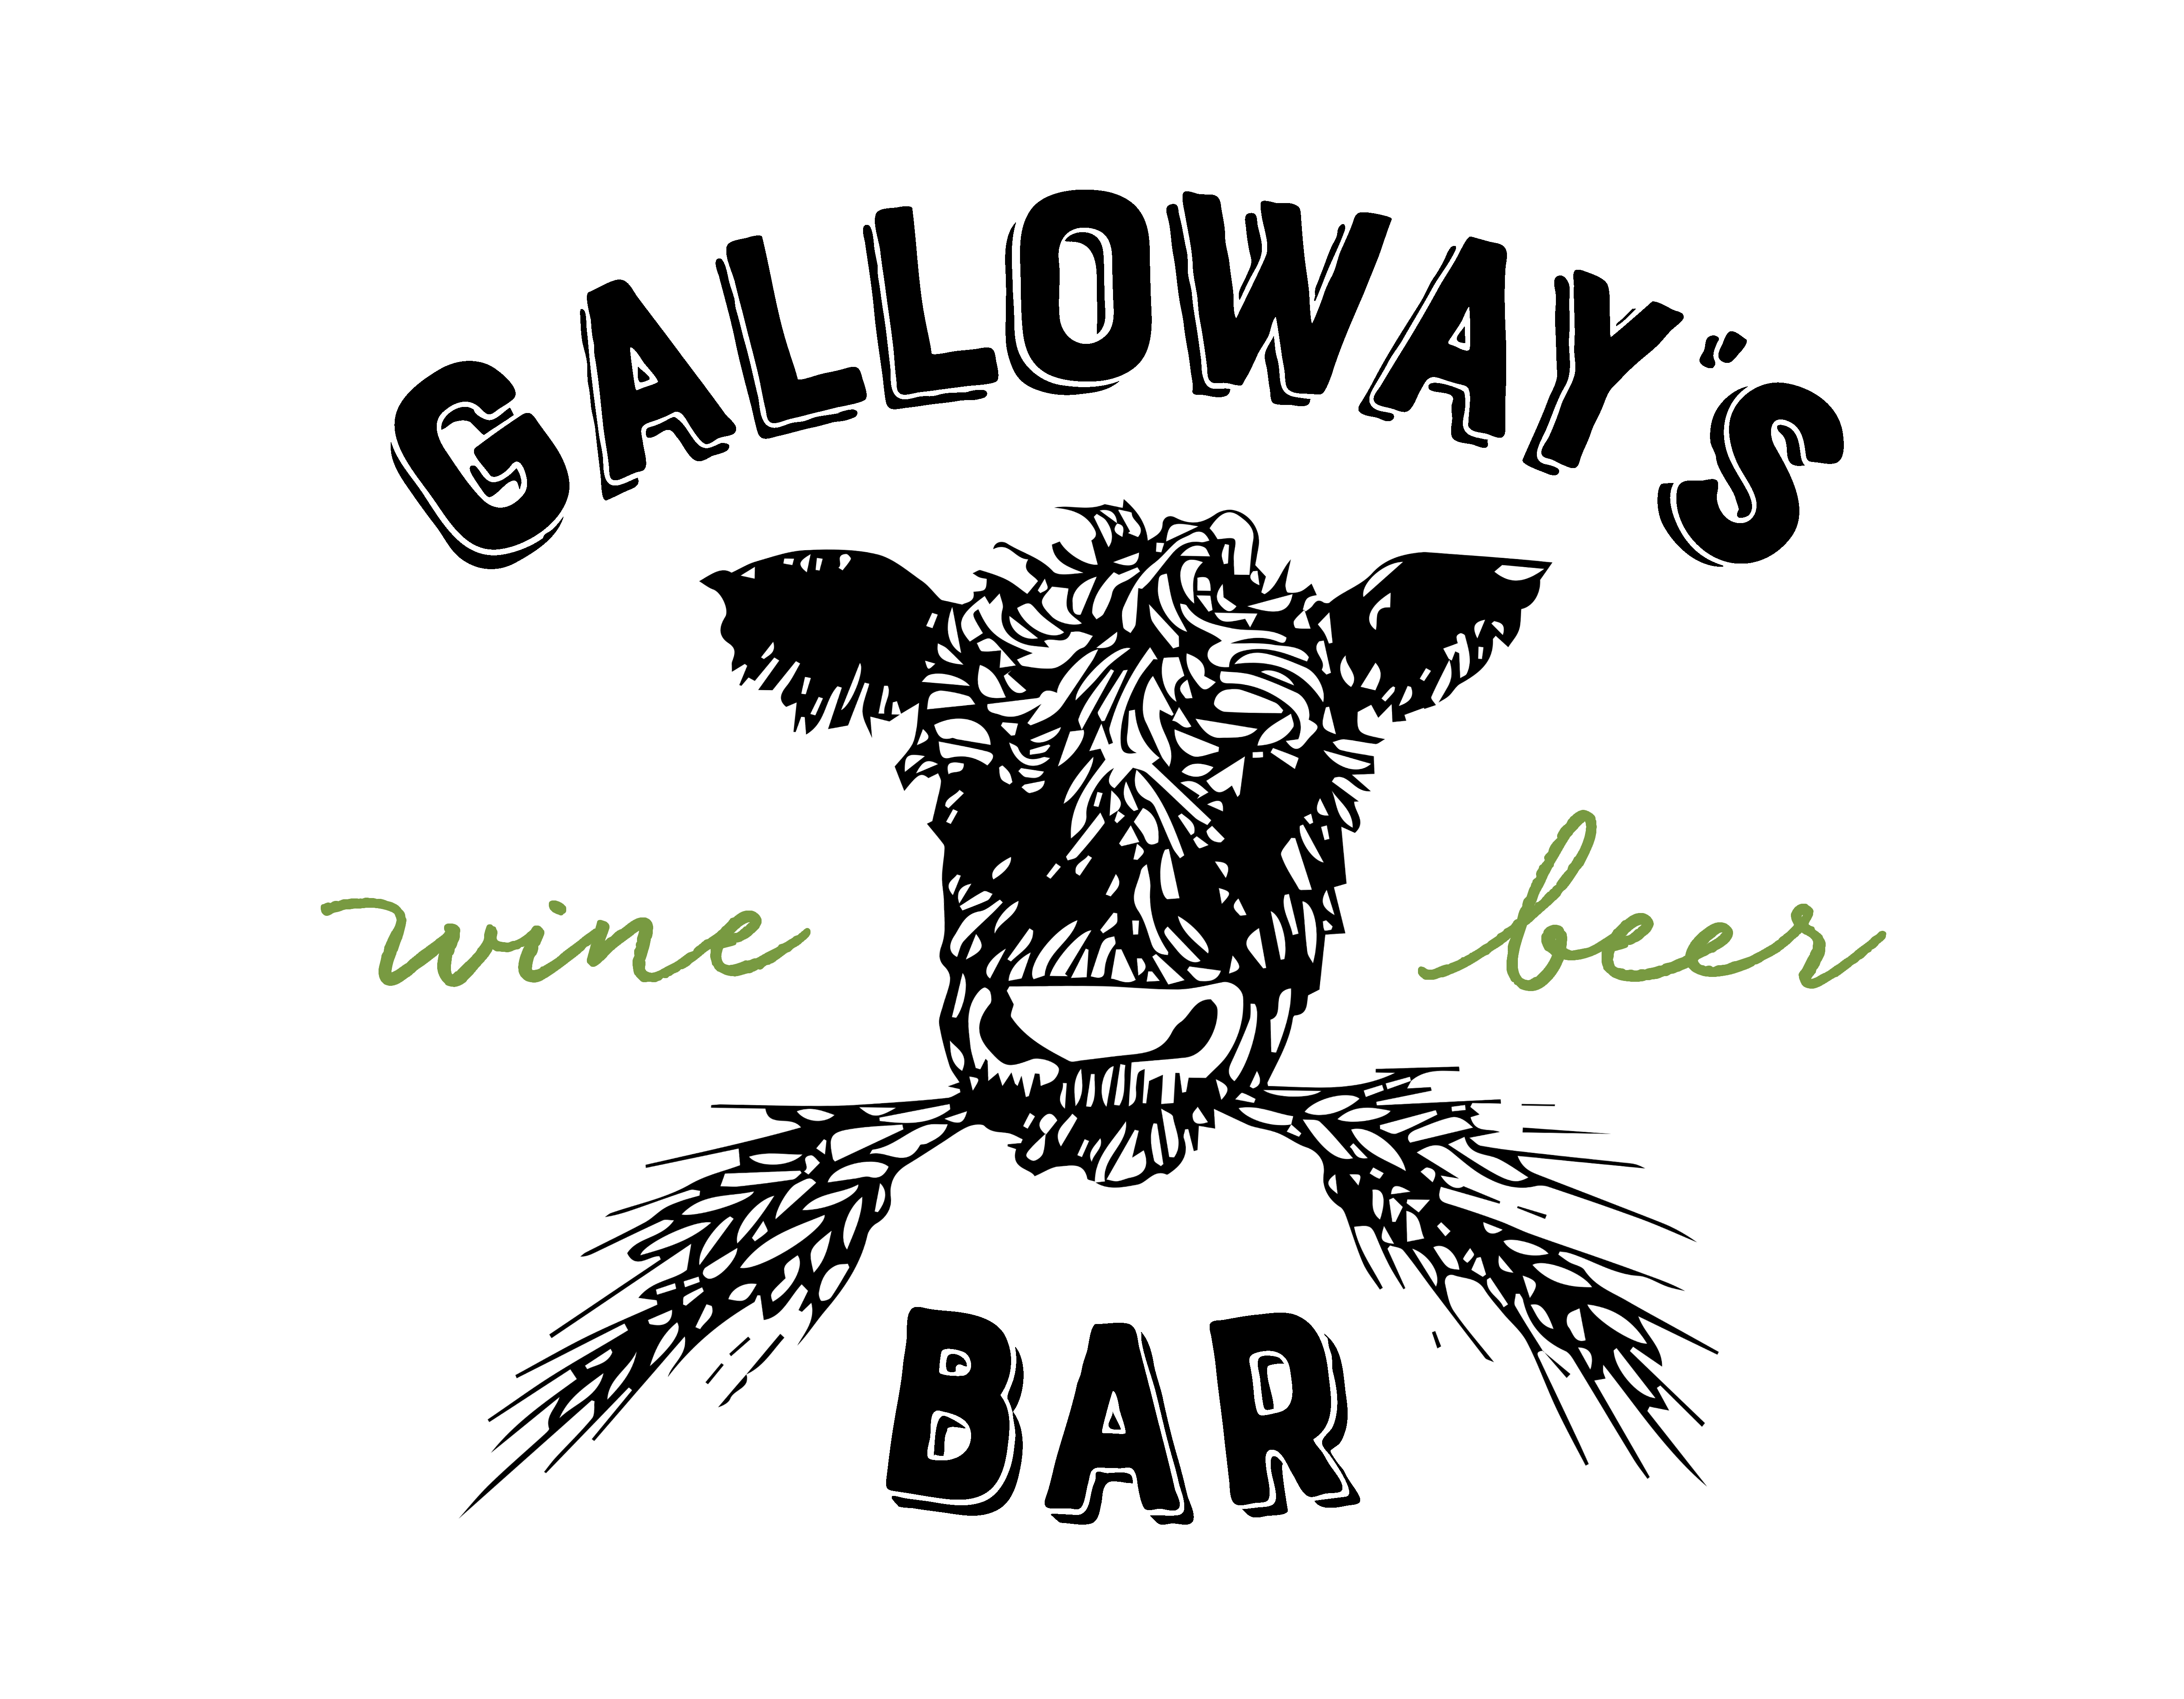 galloway's wine & beer bar logo